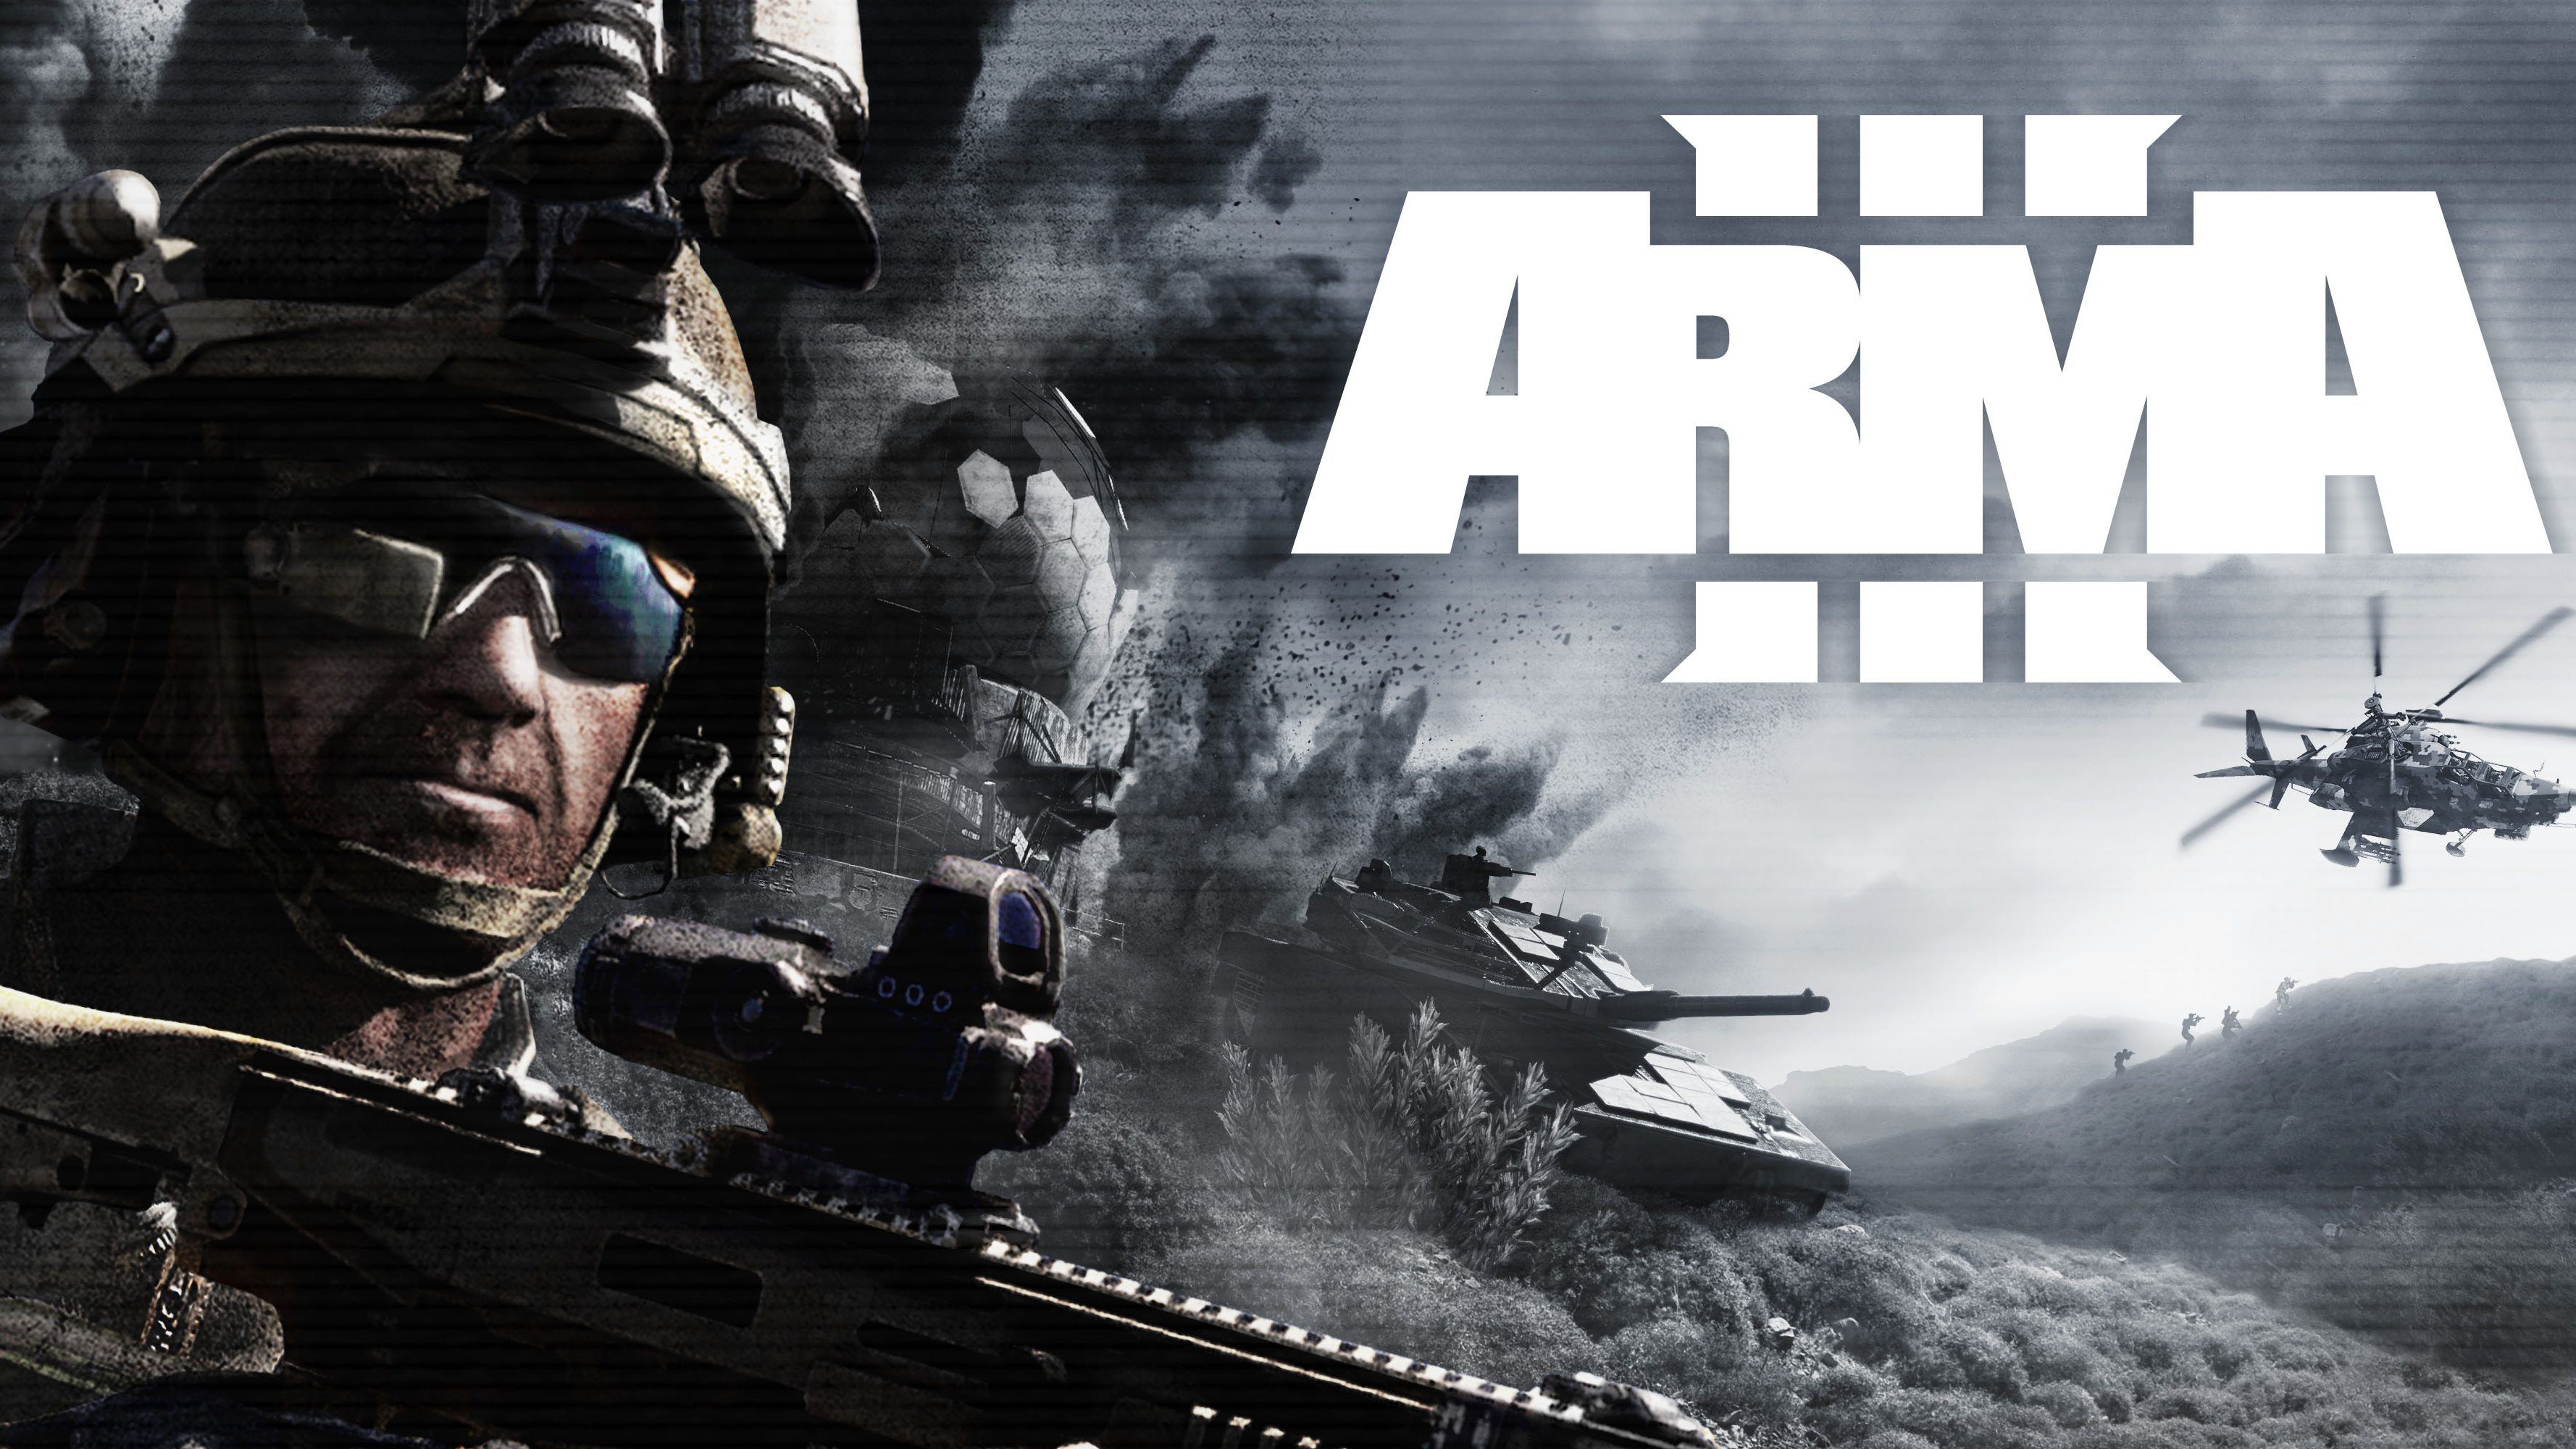 Arma 3 - Free Download PC Game (Full Version)